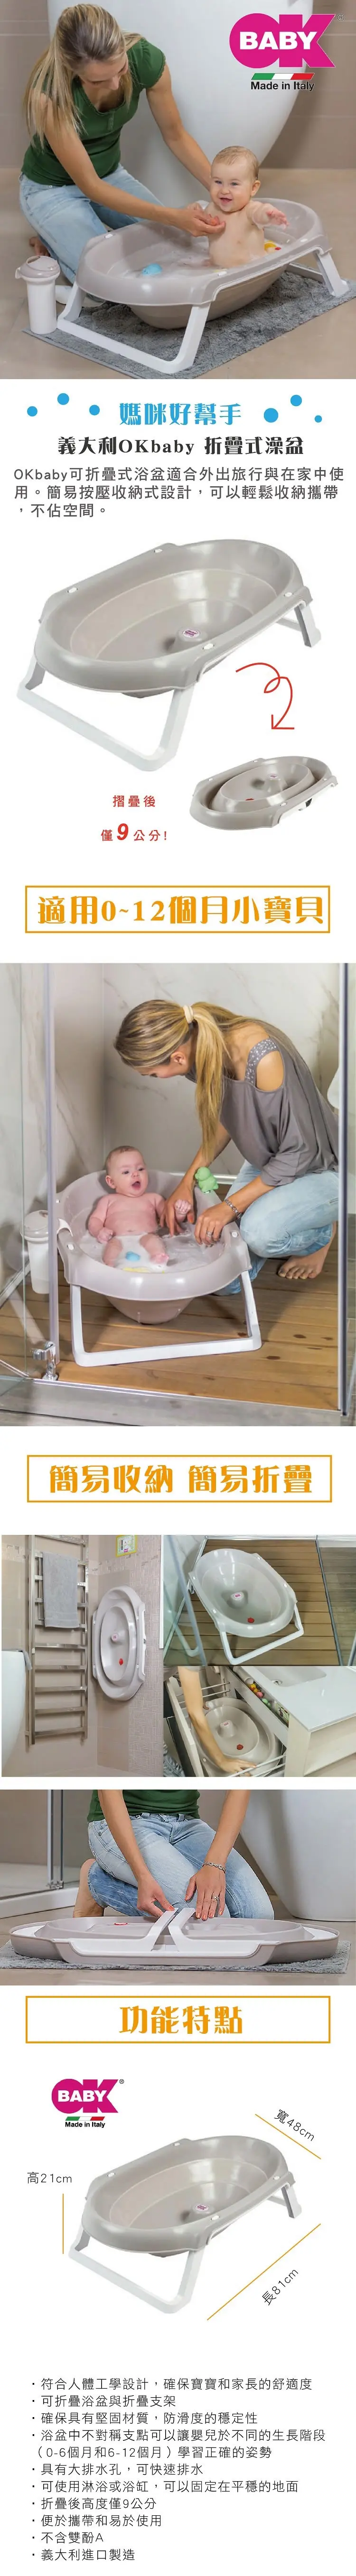 OKBABY 折疊式嬰兒浴盆